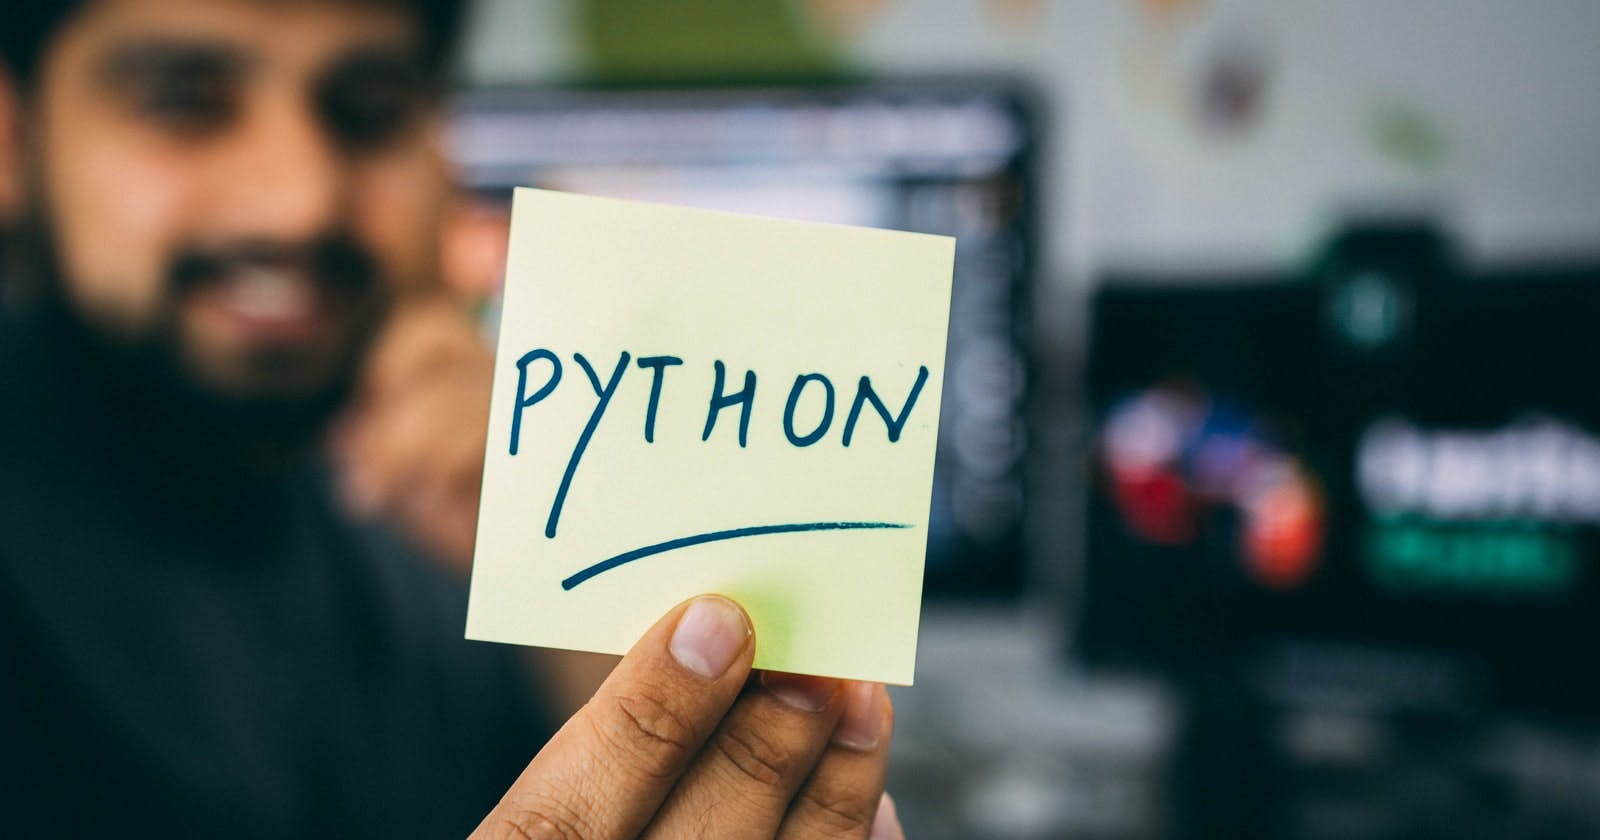 Python; The Future